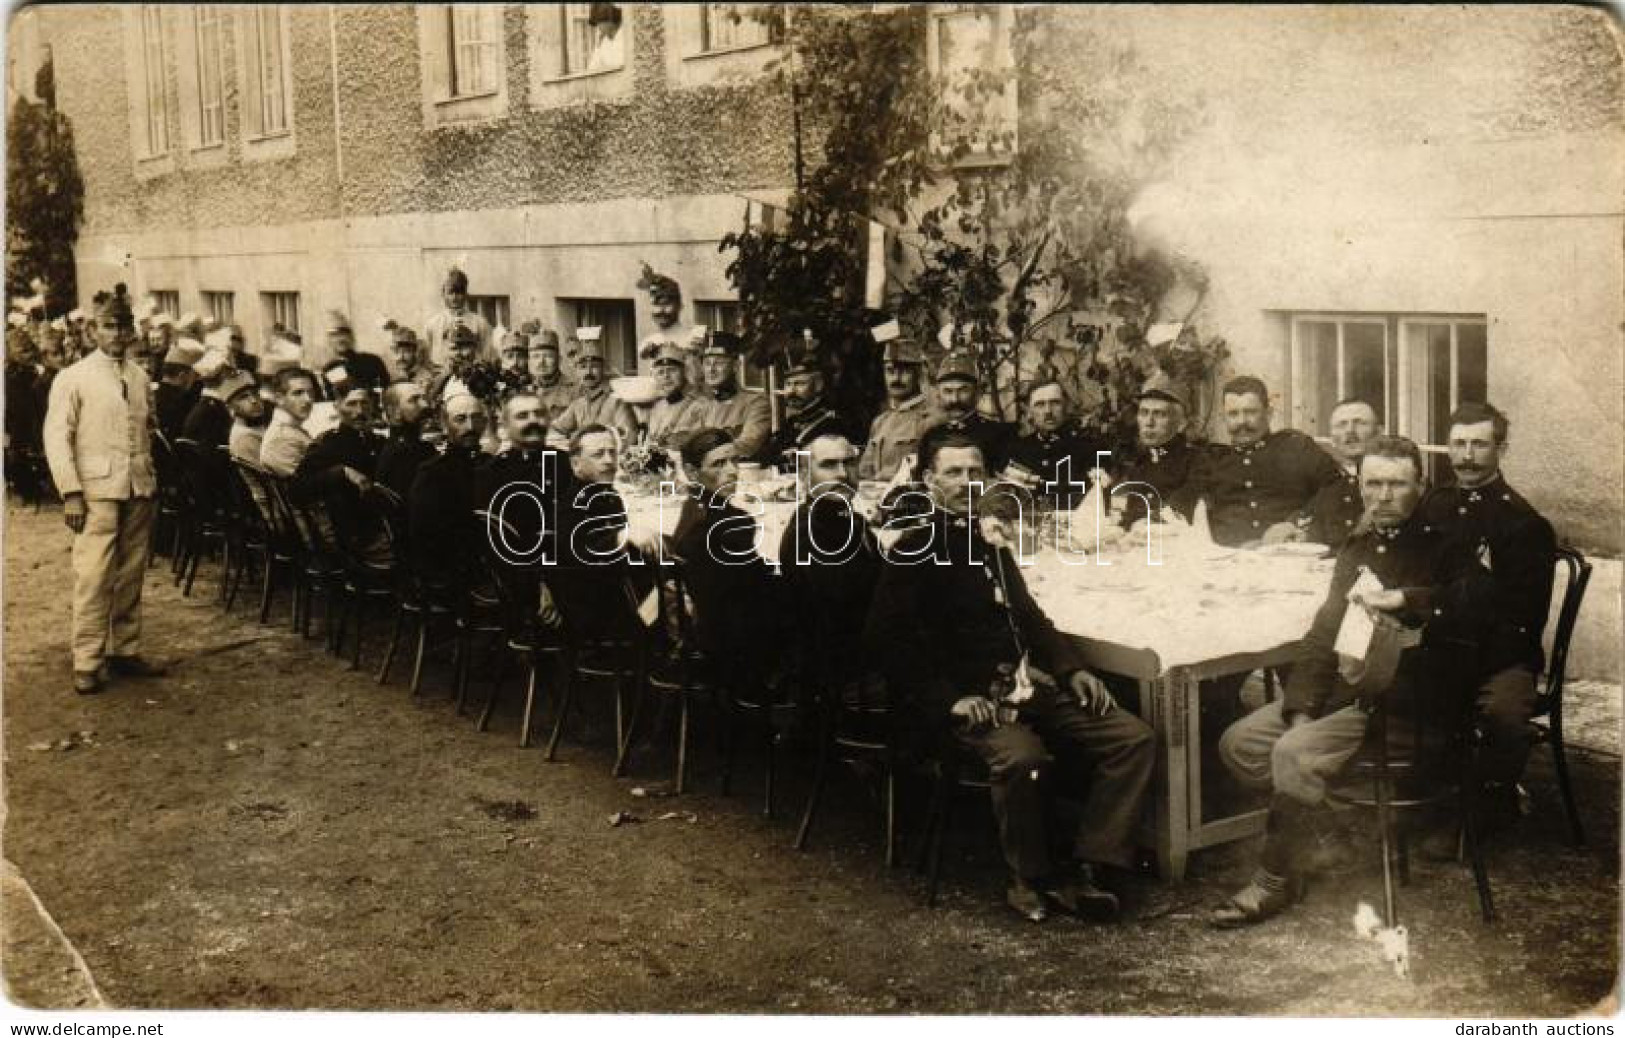 ** T3 Osztrák-magyar Katonák Ebéd Közben / WWI Austro-Hungarian K.u.K. Military, Soldiers And Officers Having Lunch. Pho - Unclassified